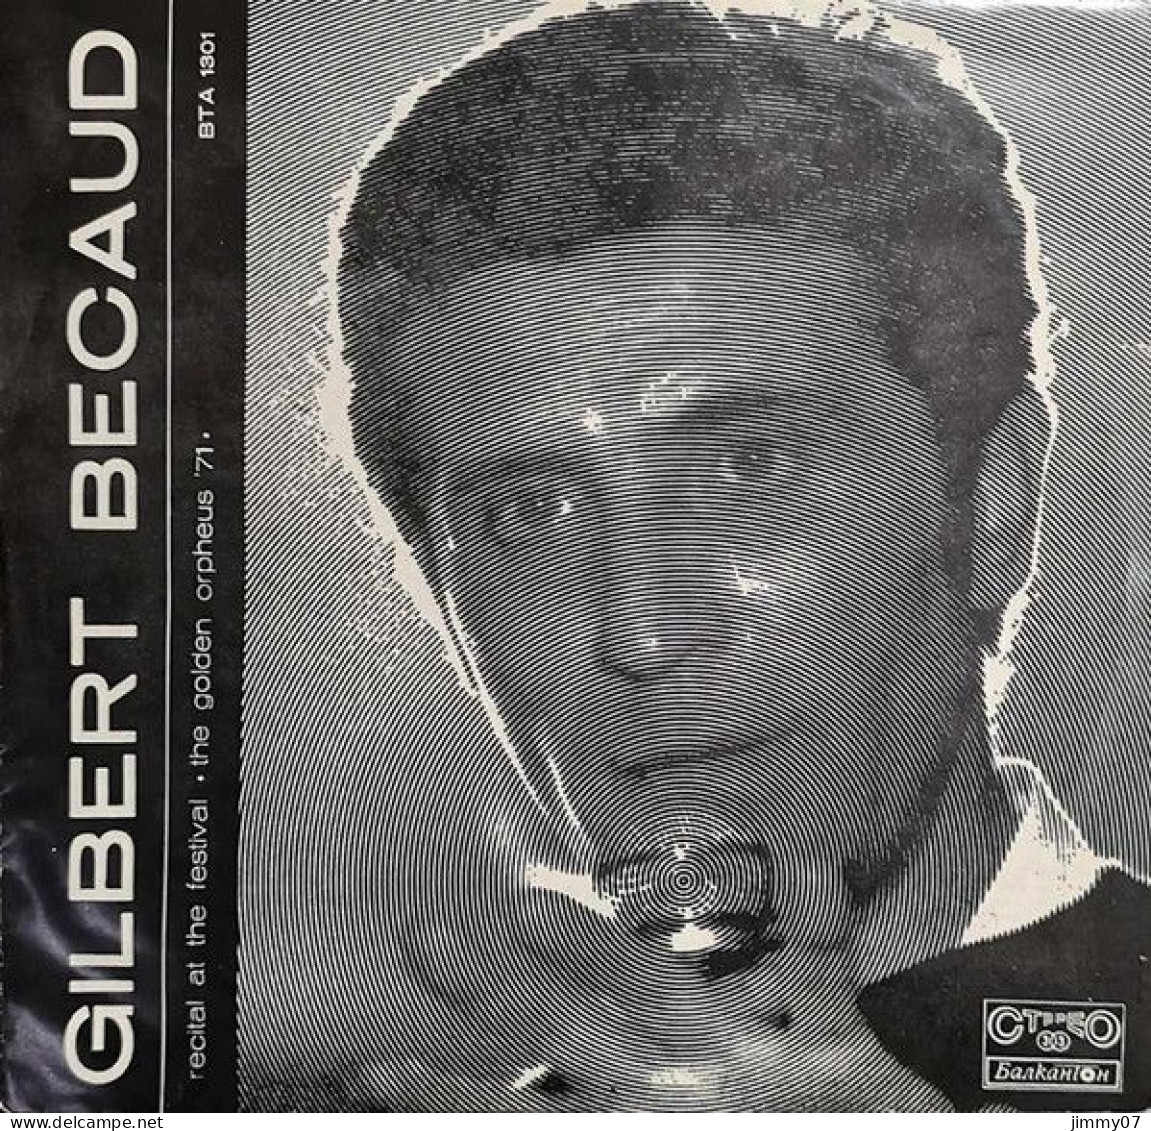 Gilbert Bécaud - Gilbert Bécaud (LP, Album) - Other - French Music